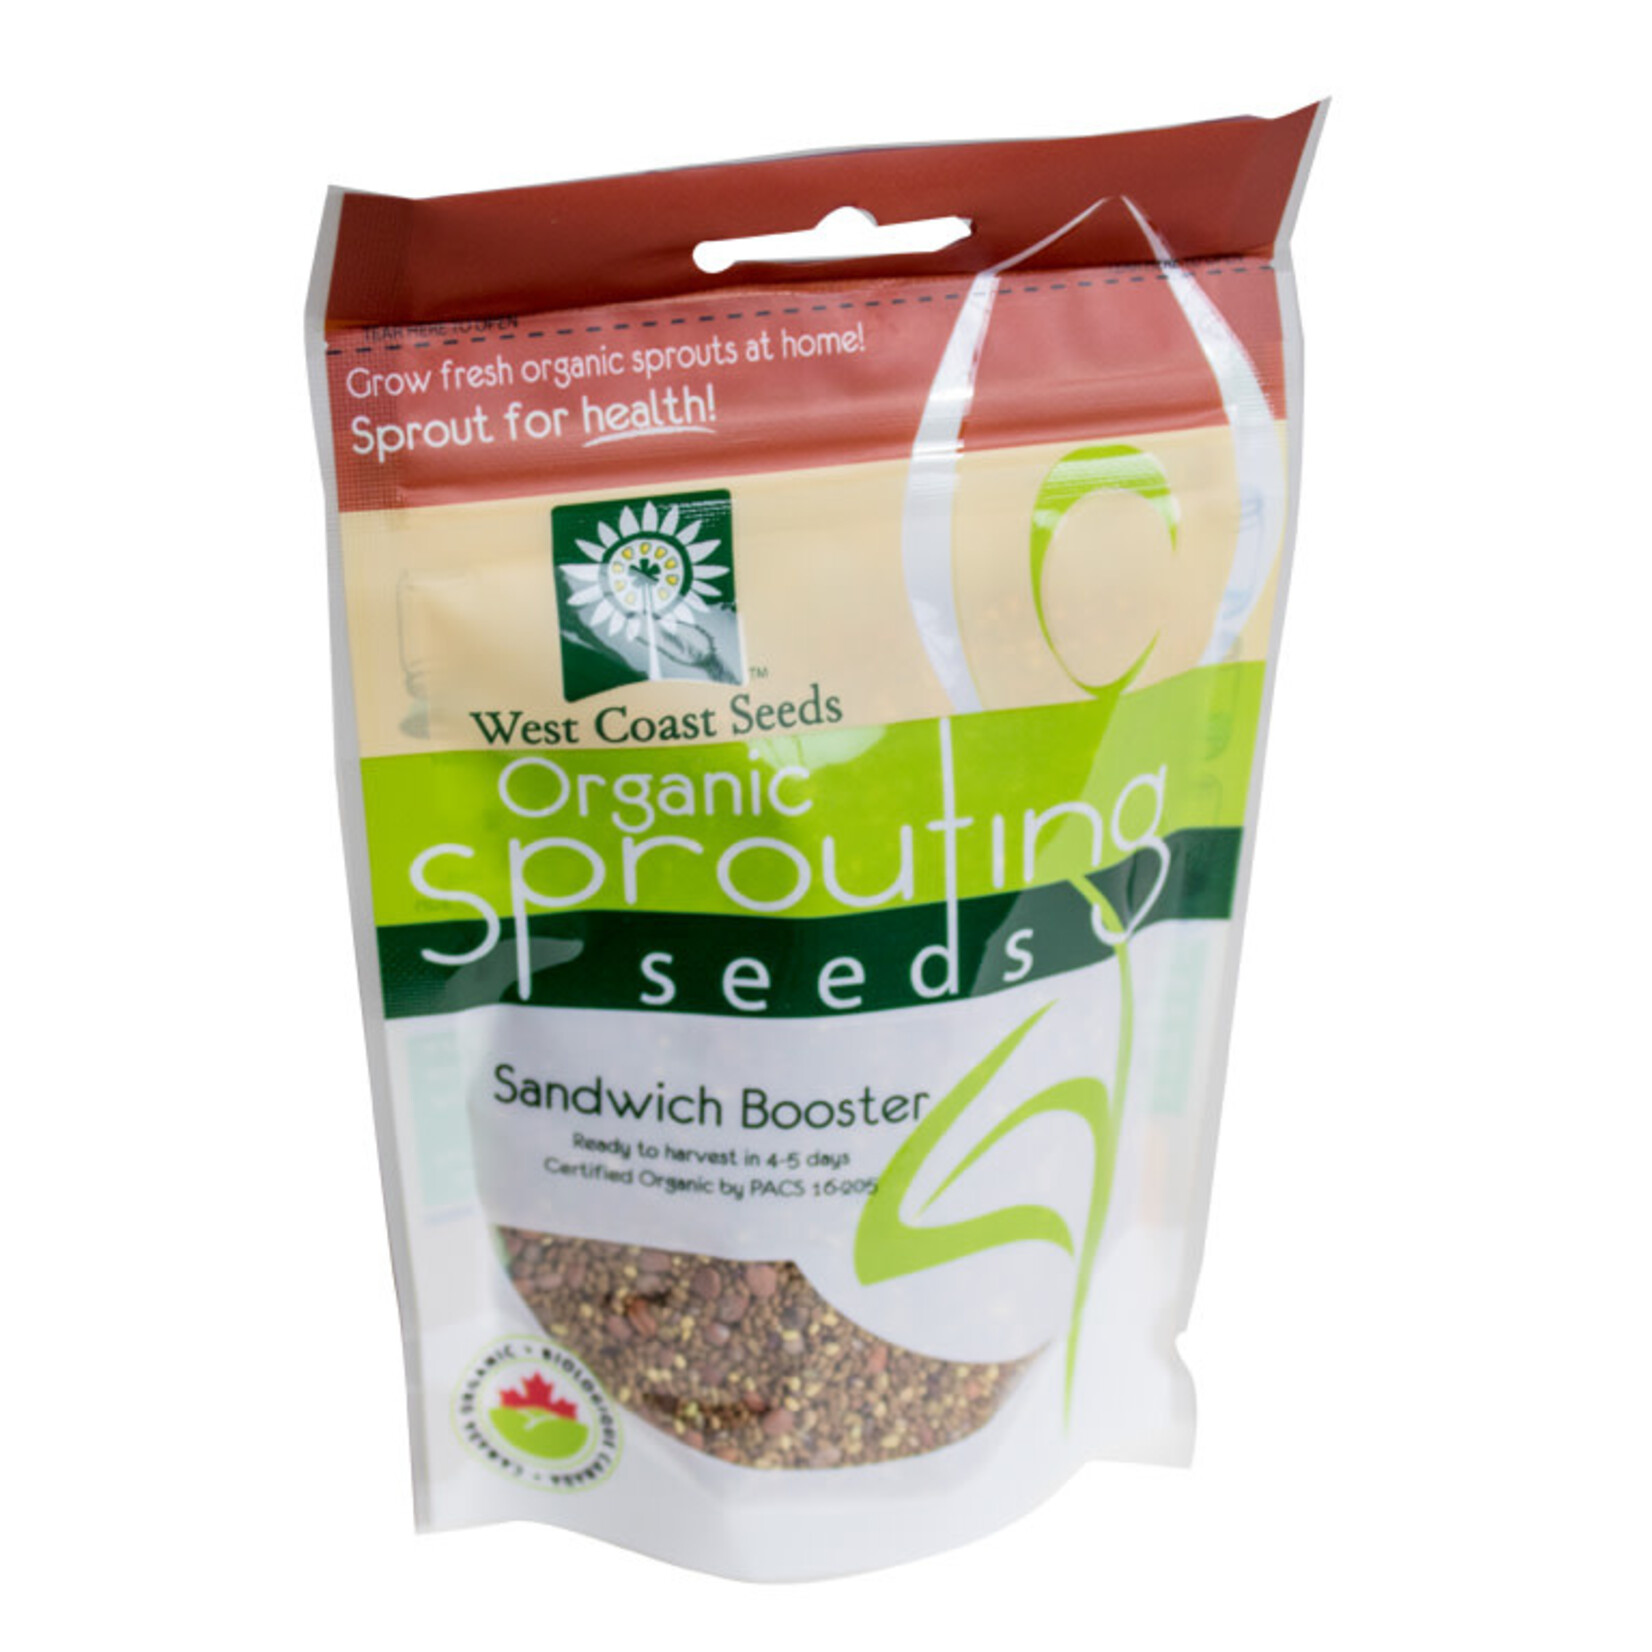 West Coast Seeds Sandwich Booster - Sandwich Booster Certified Organic